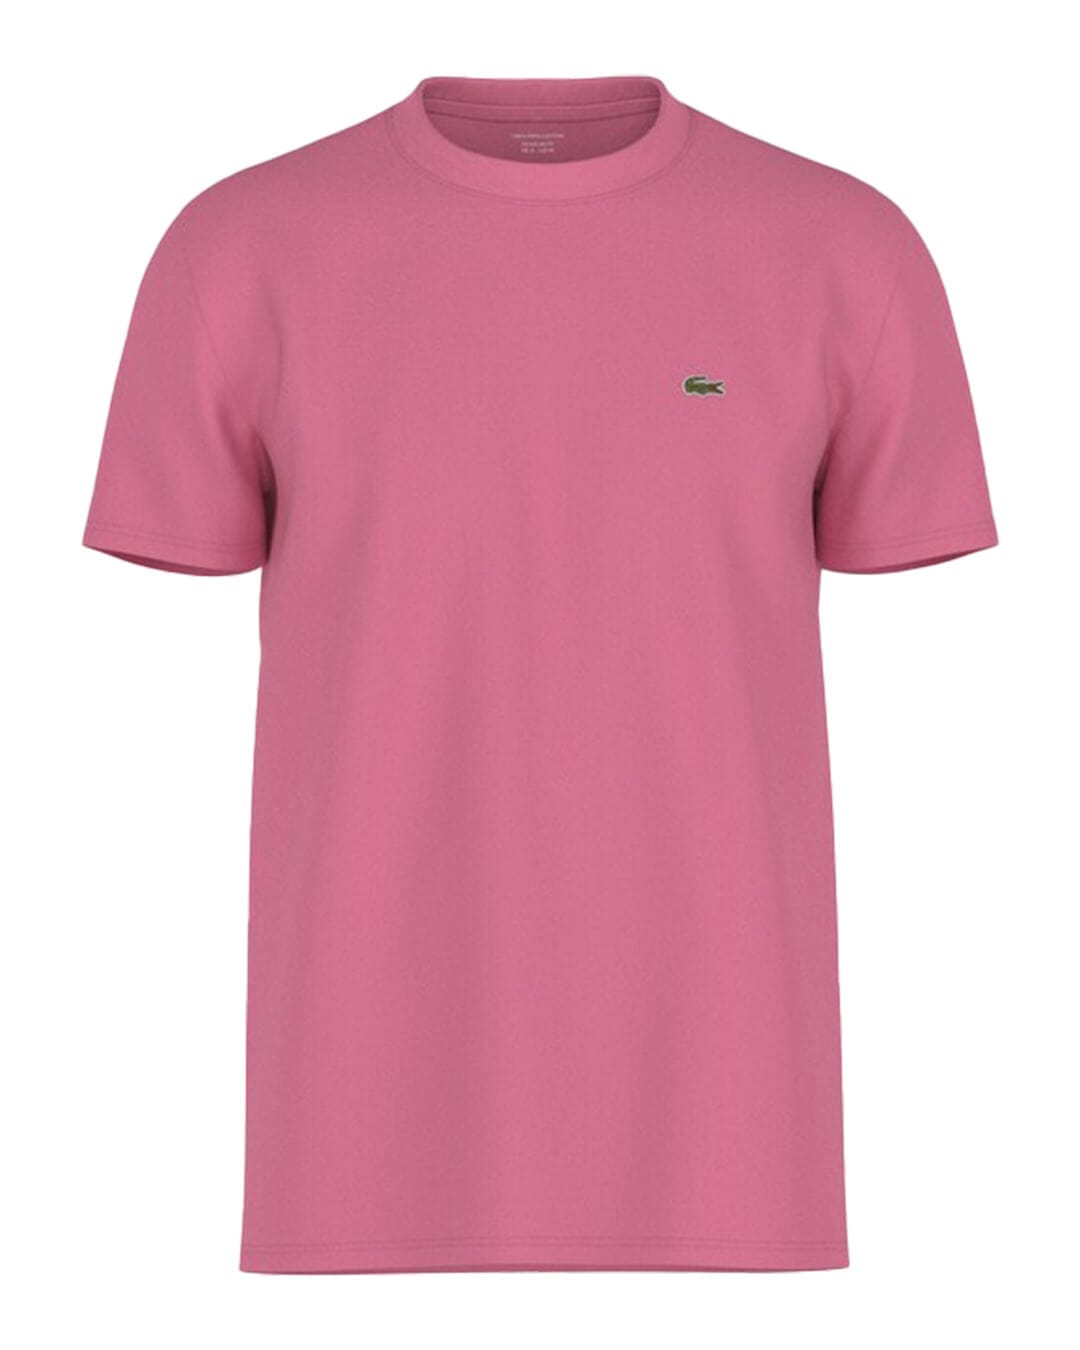 Lacoste T-Shirts Lacoste Crew Neck Pima Cotton Pink Jersey T-shirt